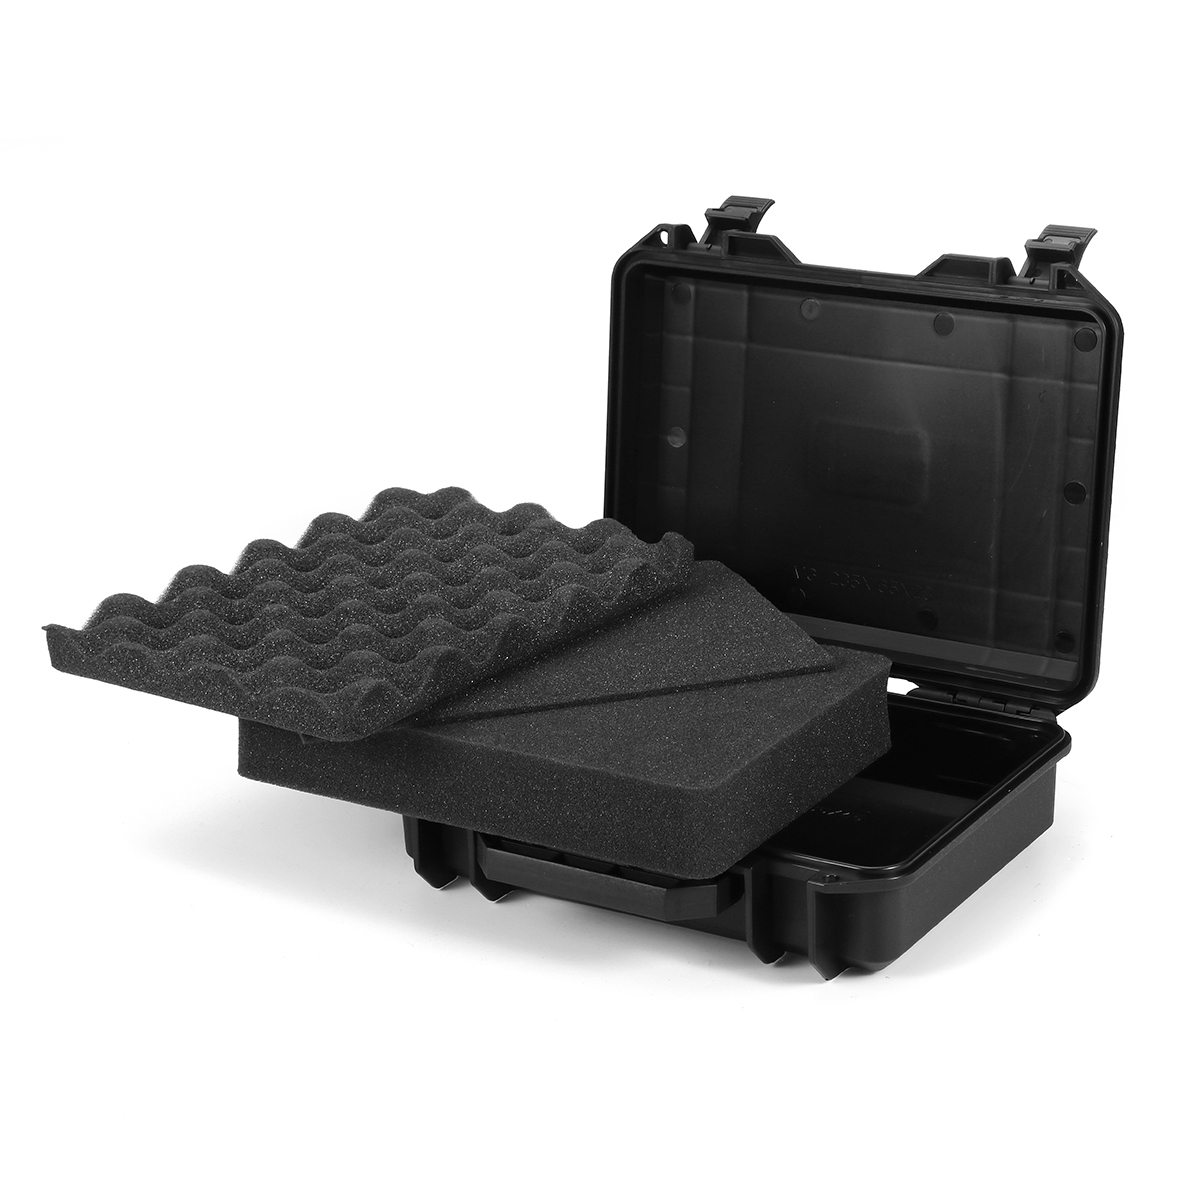 Waterproof-Hard-Carry-Case-Tool-Kits-Impact-Resistant-Shockproof-Storage-Box-New-1658756-3